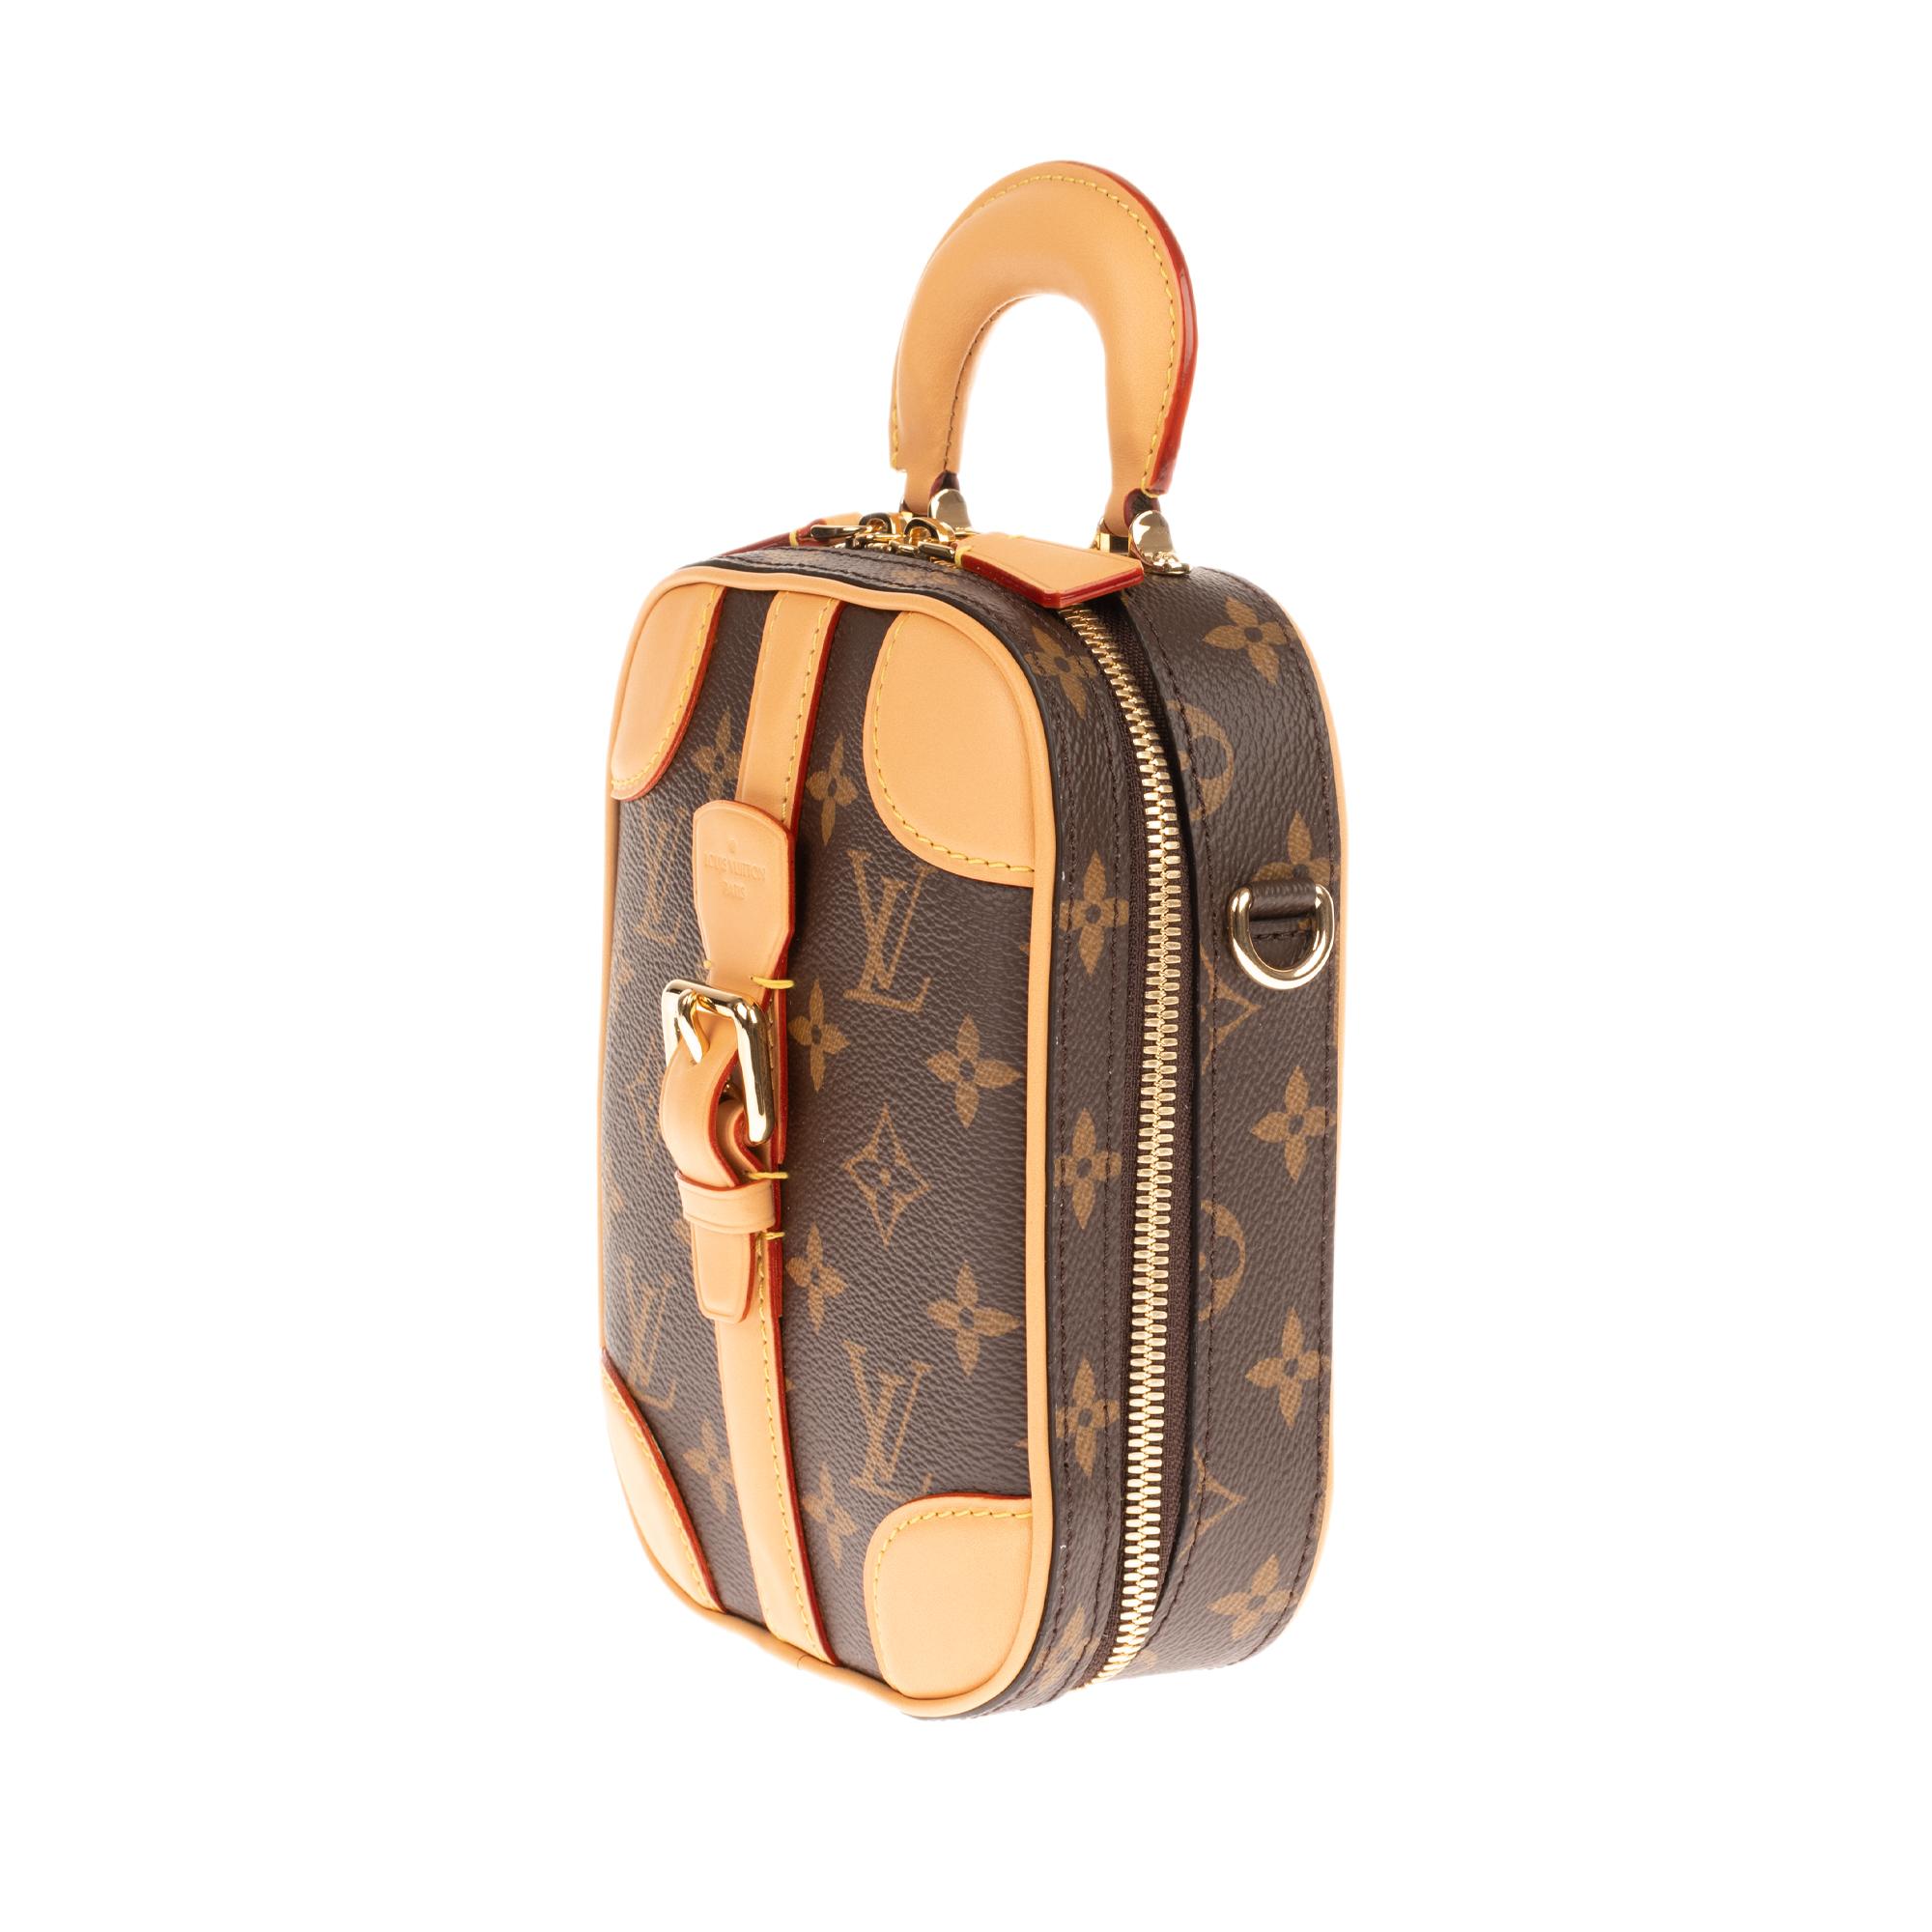 Brown BRAND NEW - Louis Vuitton Mini Trunk shoulder bag in monogram canvas